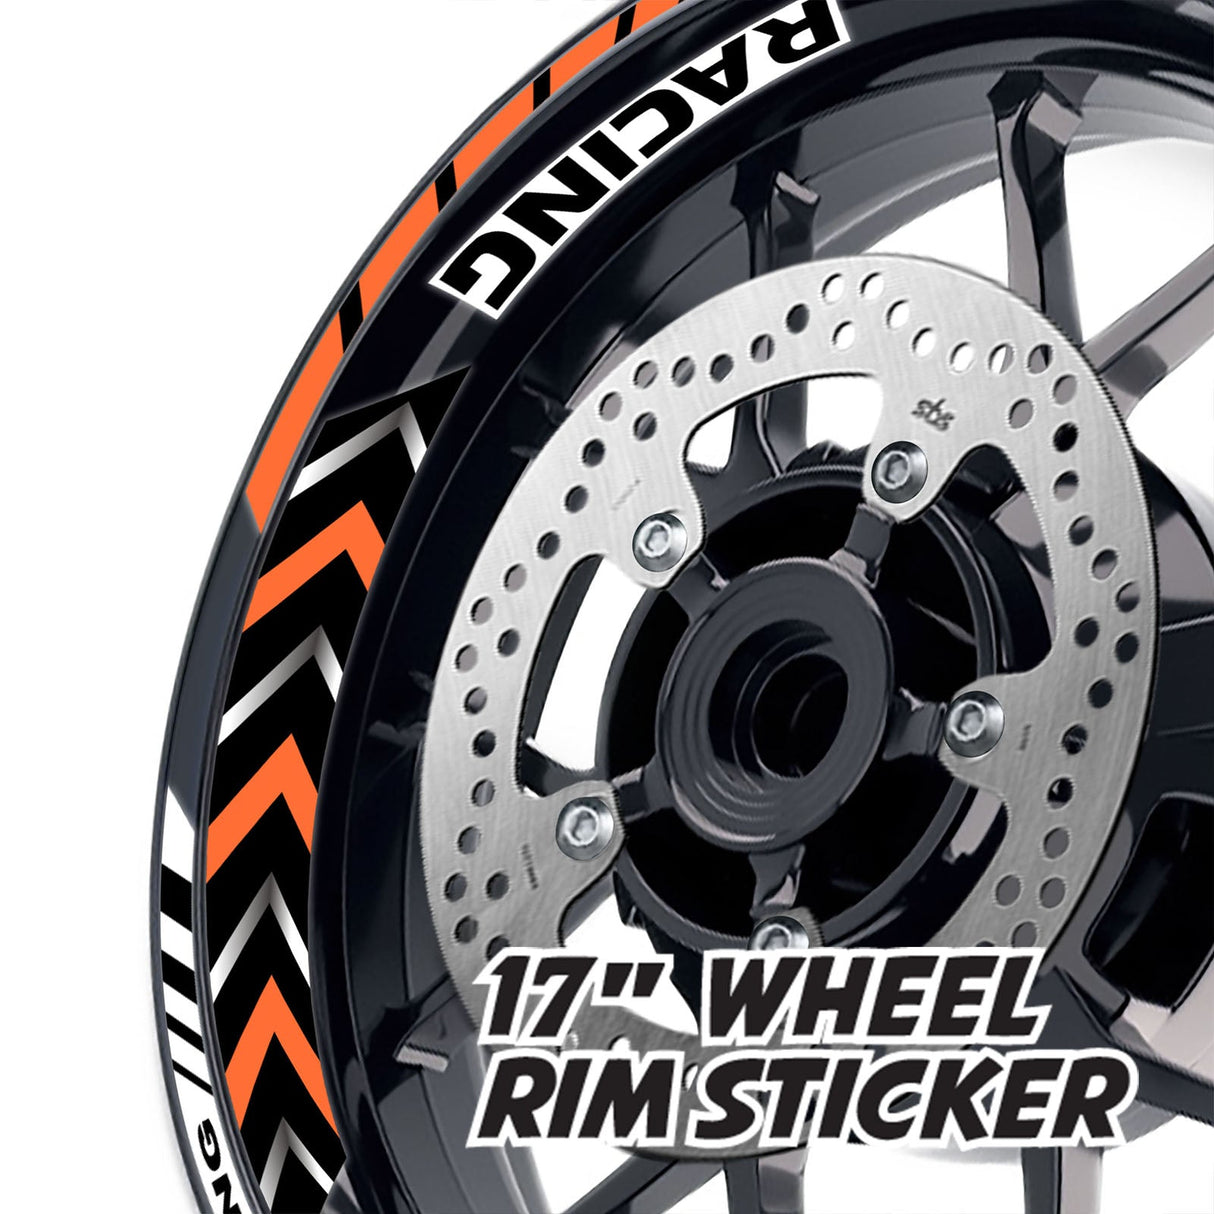 StickerBao Orange 17 inch GP11 Platinum Inner Edge Rim Sticker Universal Motorcycle Rim Wheel Decal Racing For Honda